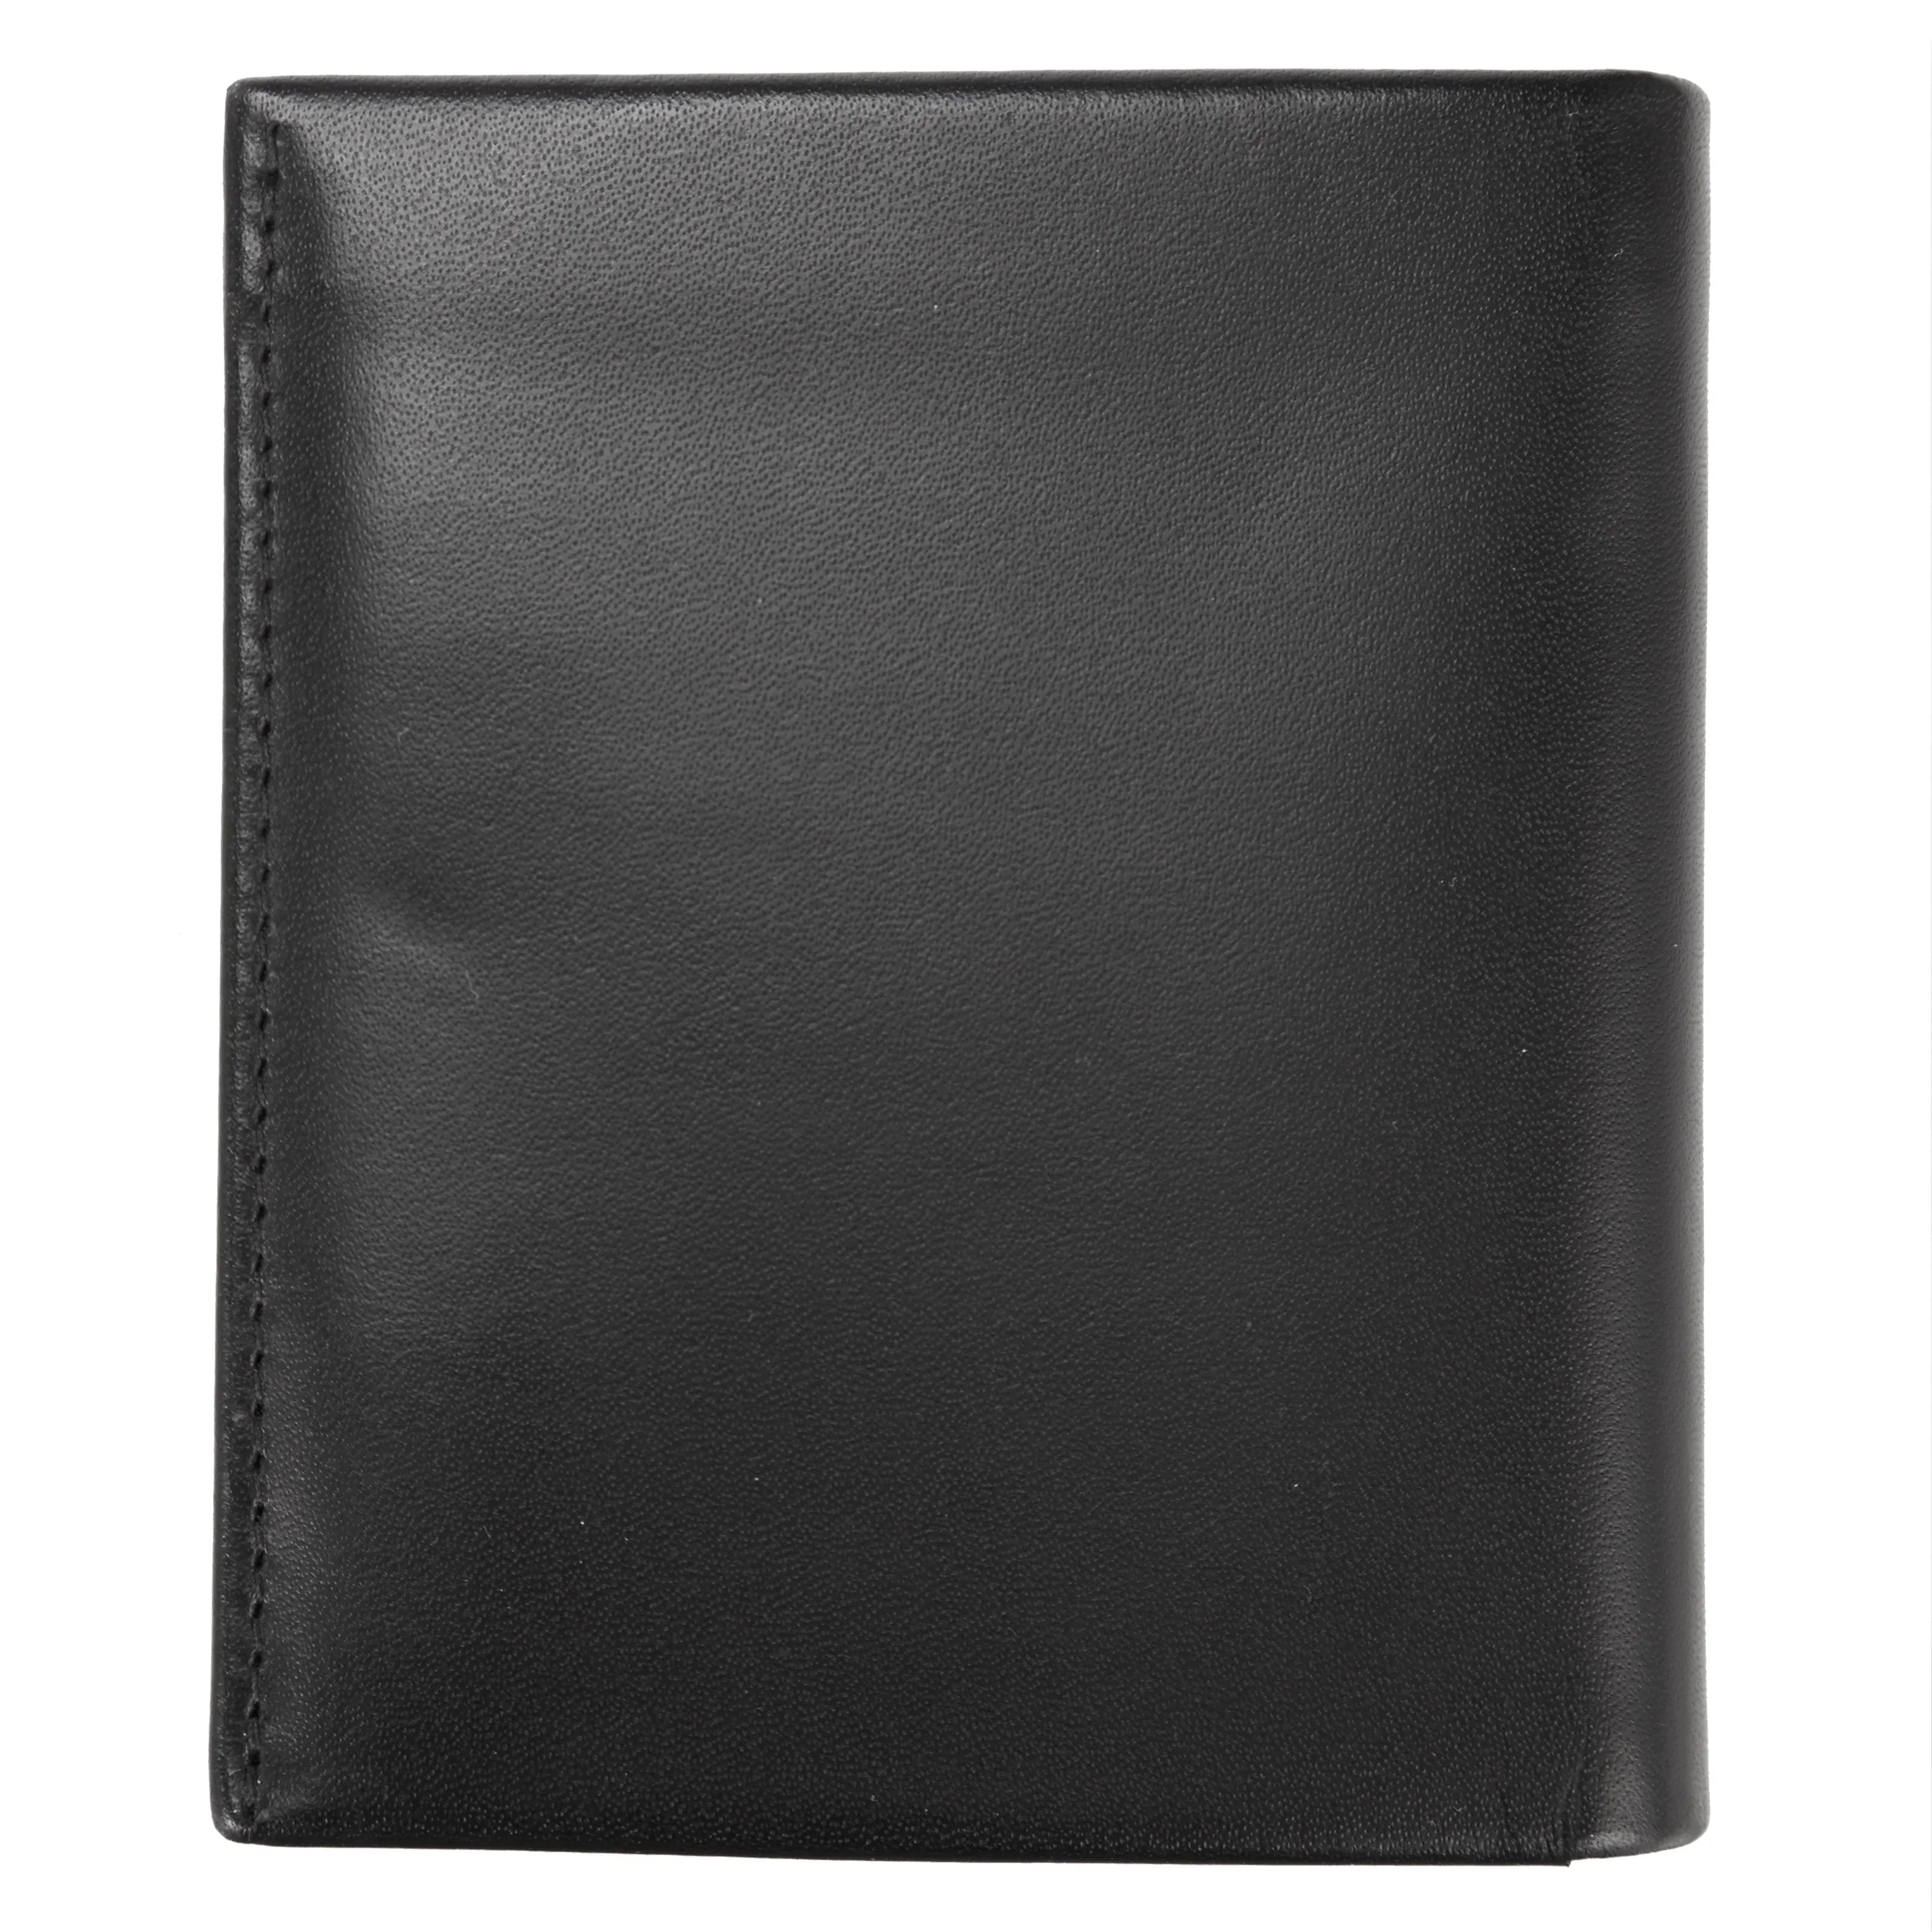 Porsche Design Accessories Classic Wallet 6 RFID 10 cm - Black